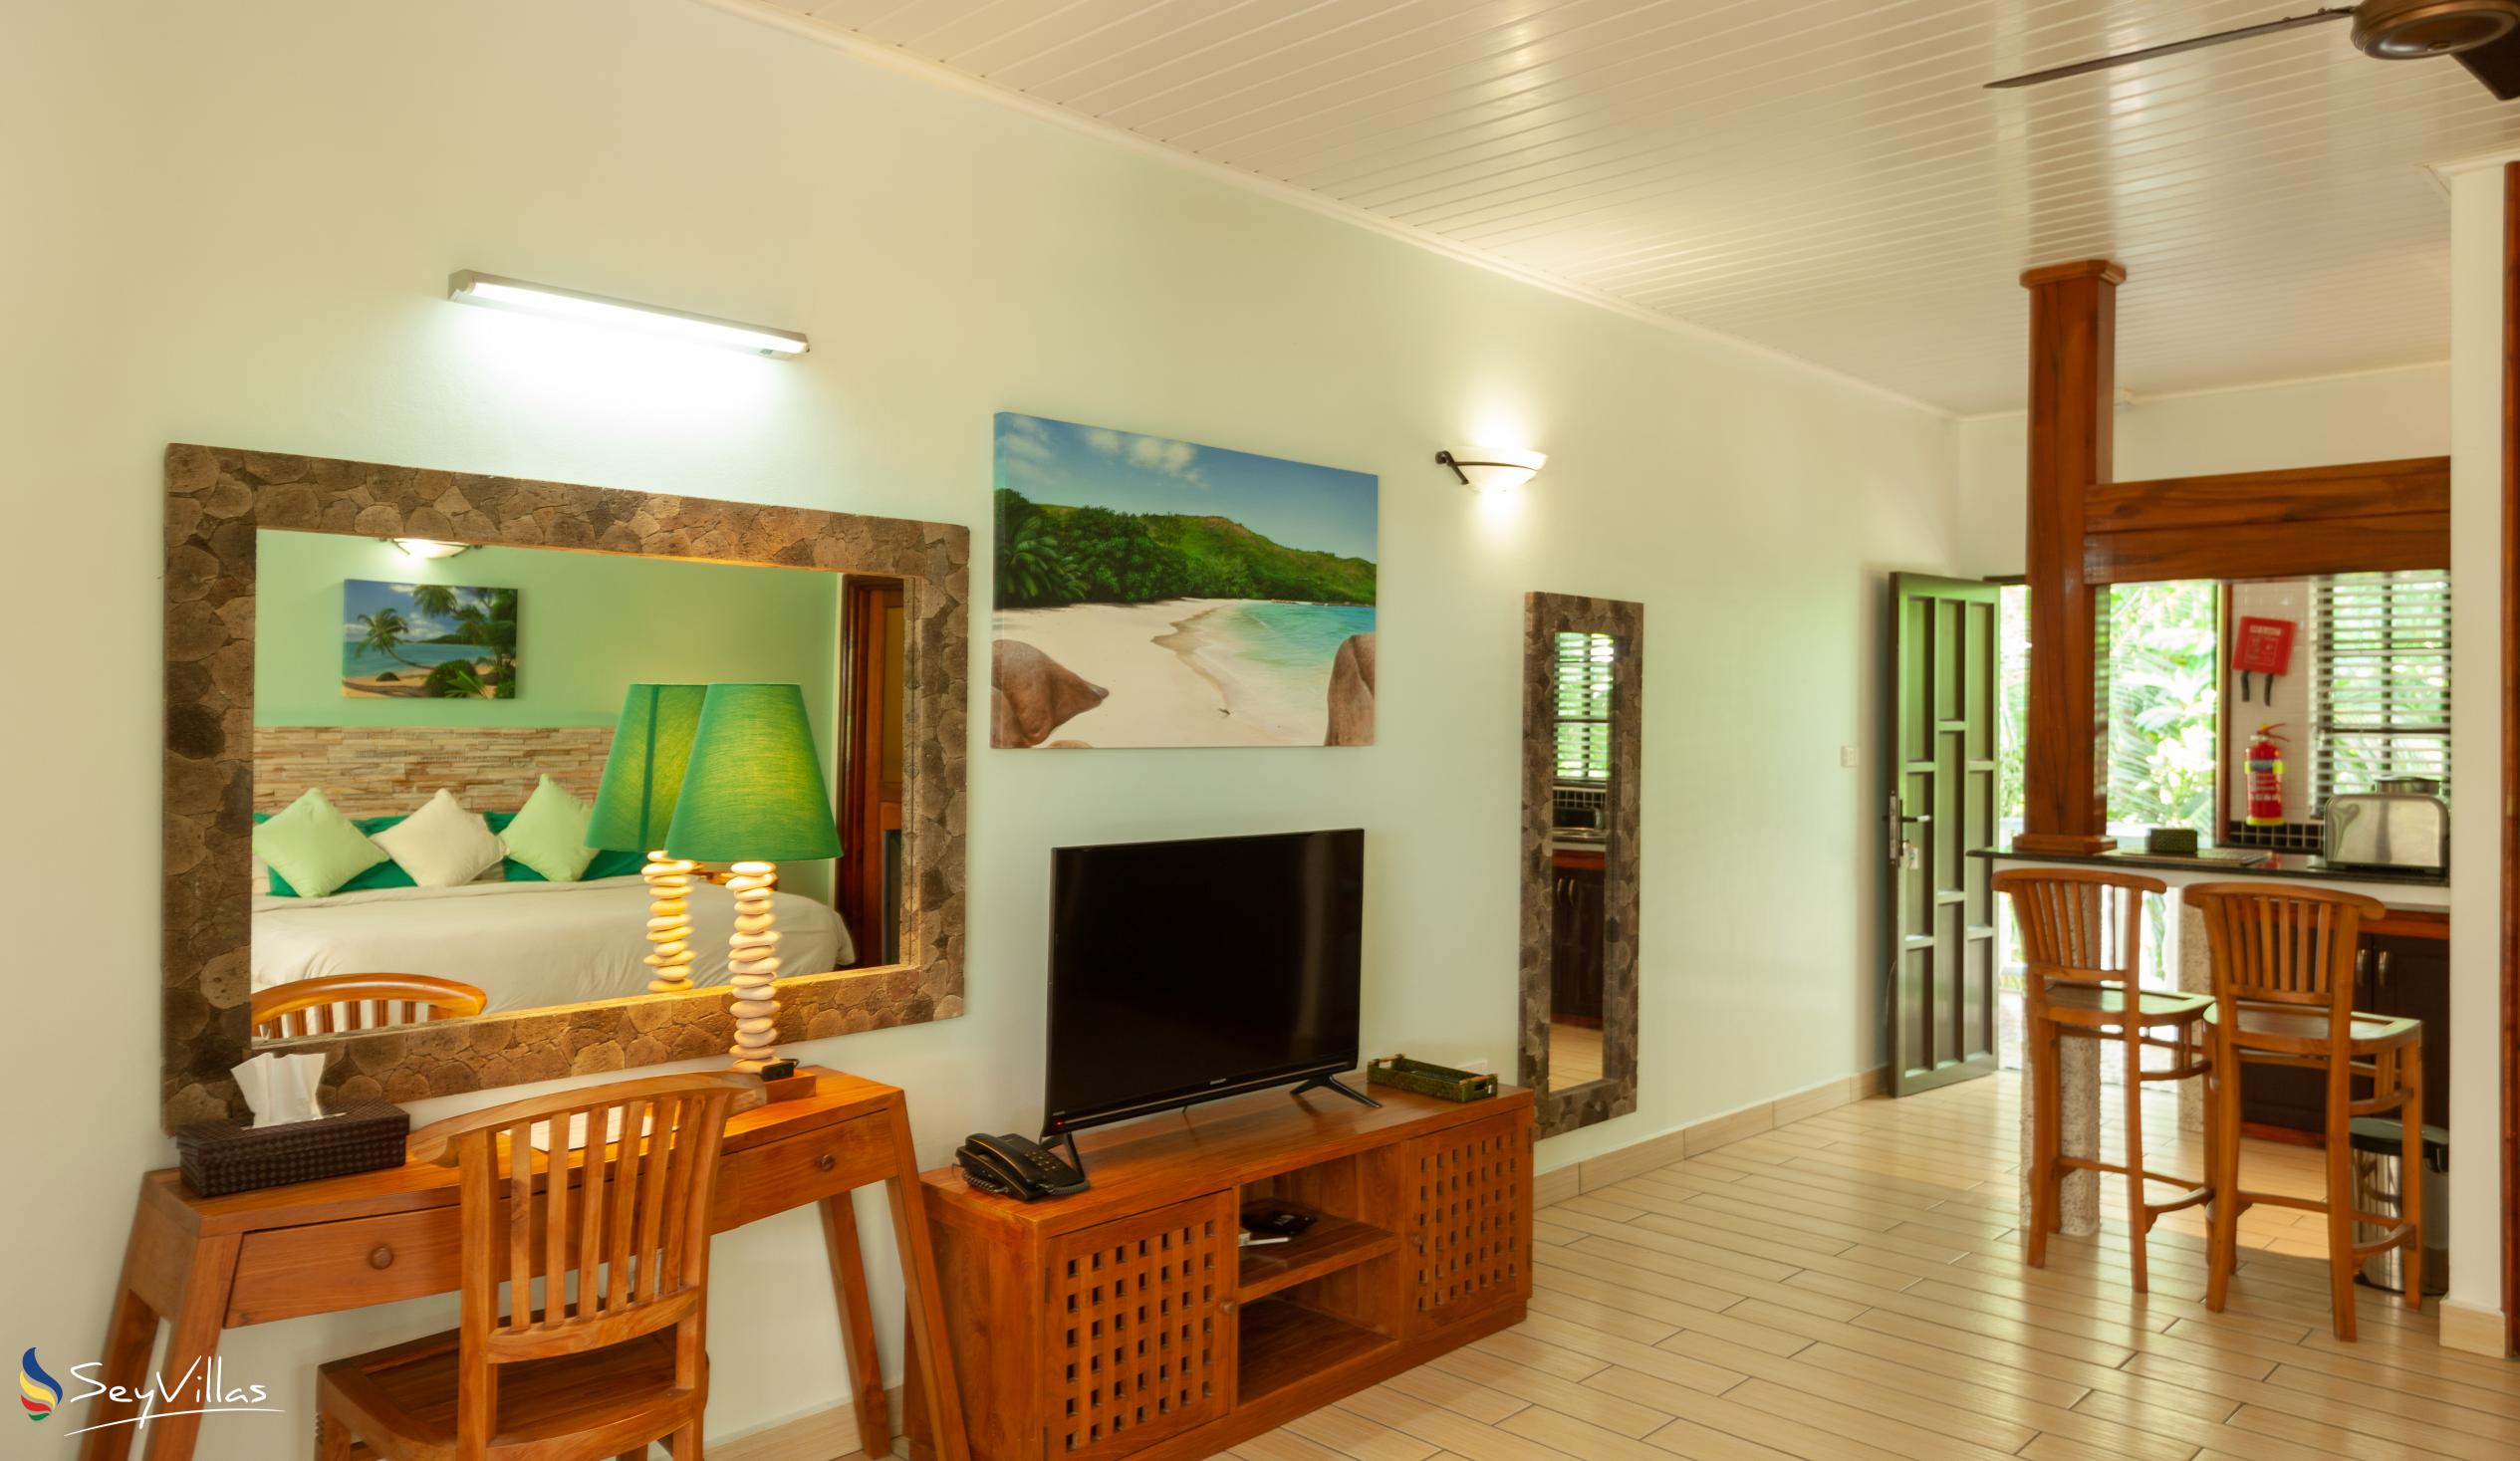 Photo 26: La Digue Self Catering - Standard Apartment - La Digue (Seychelles)